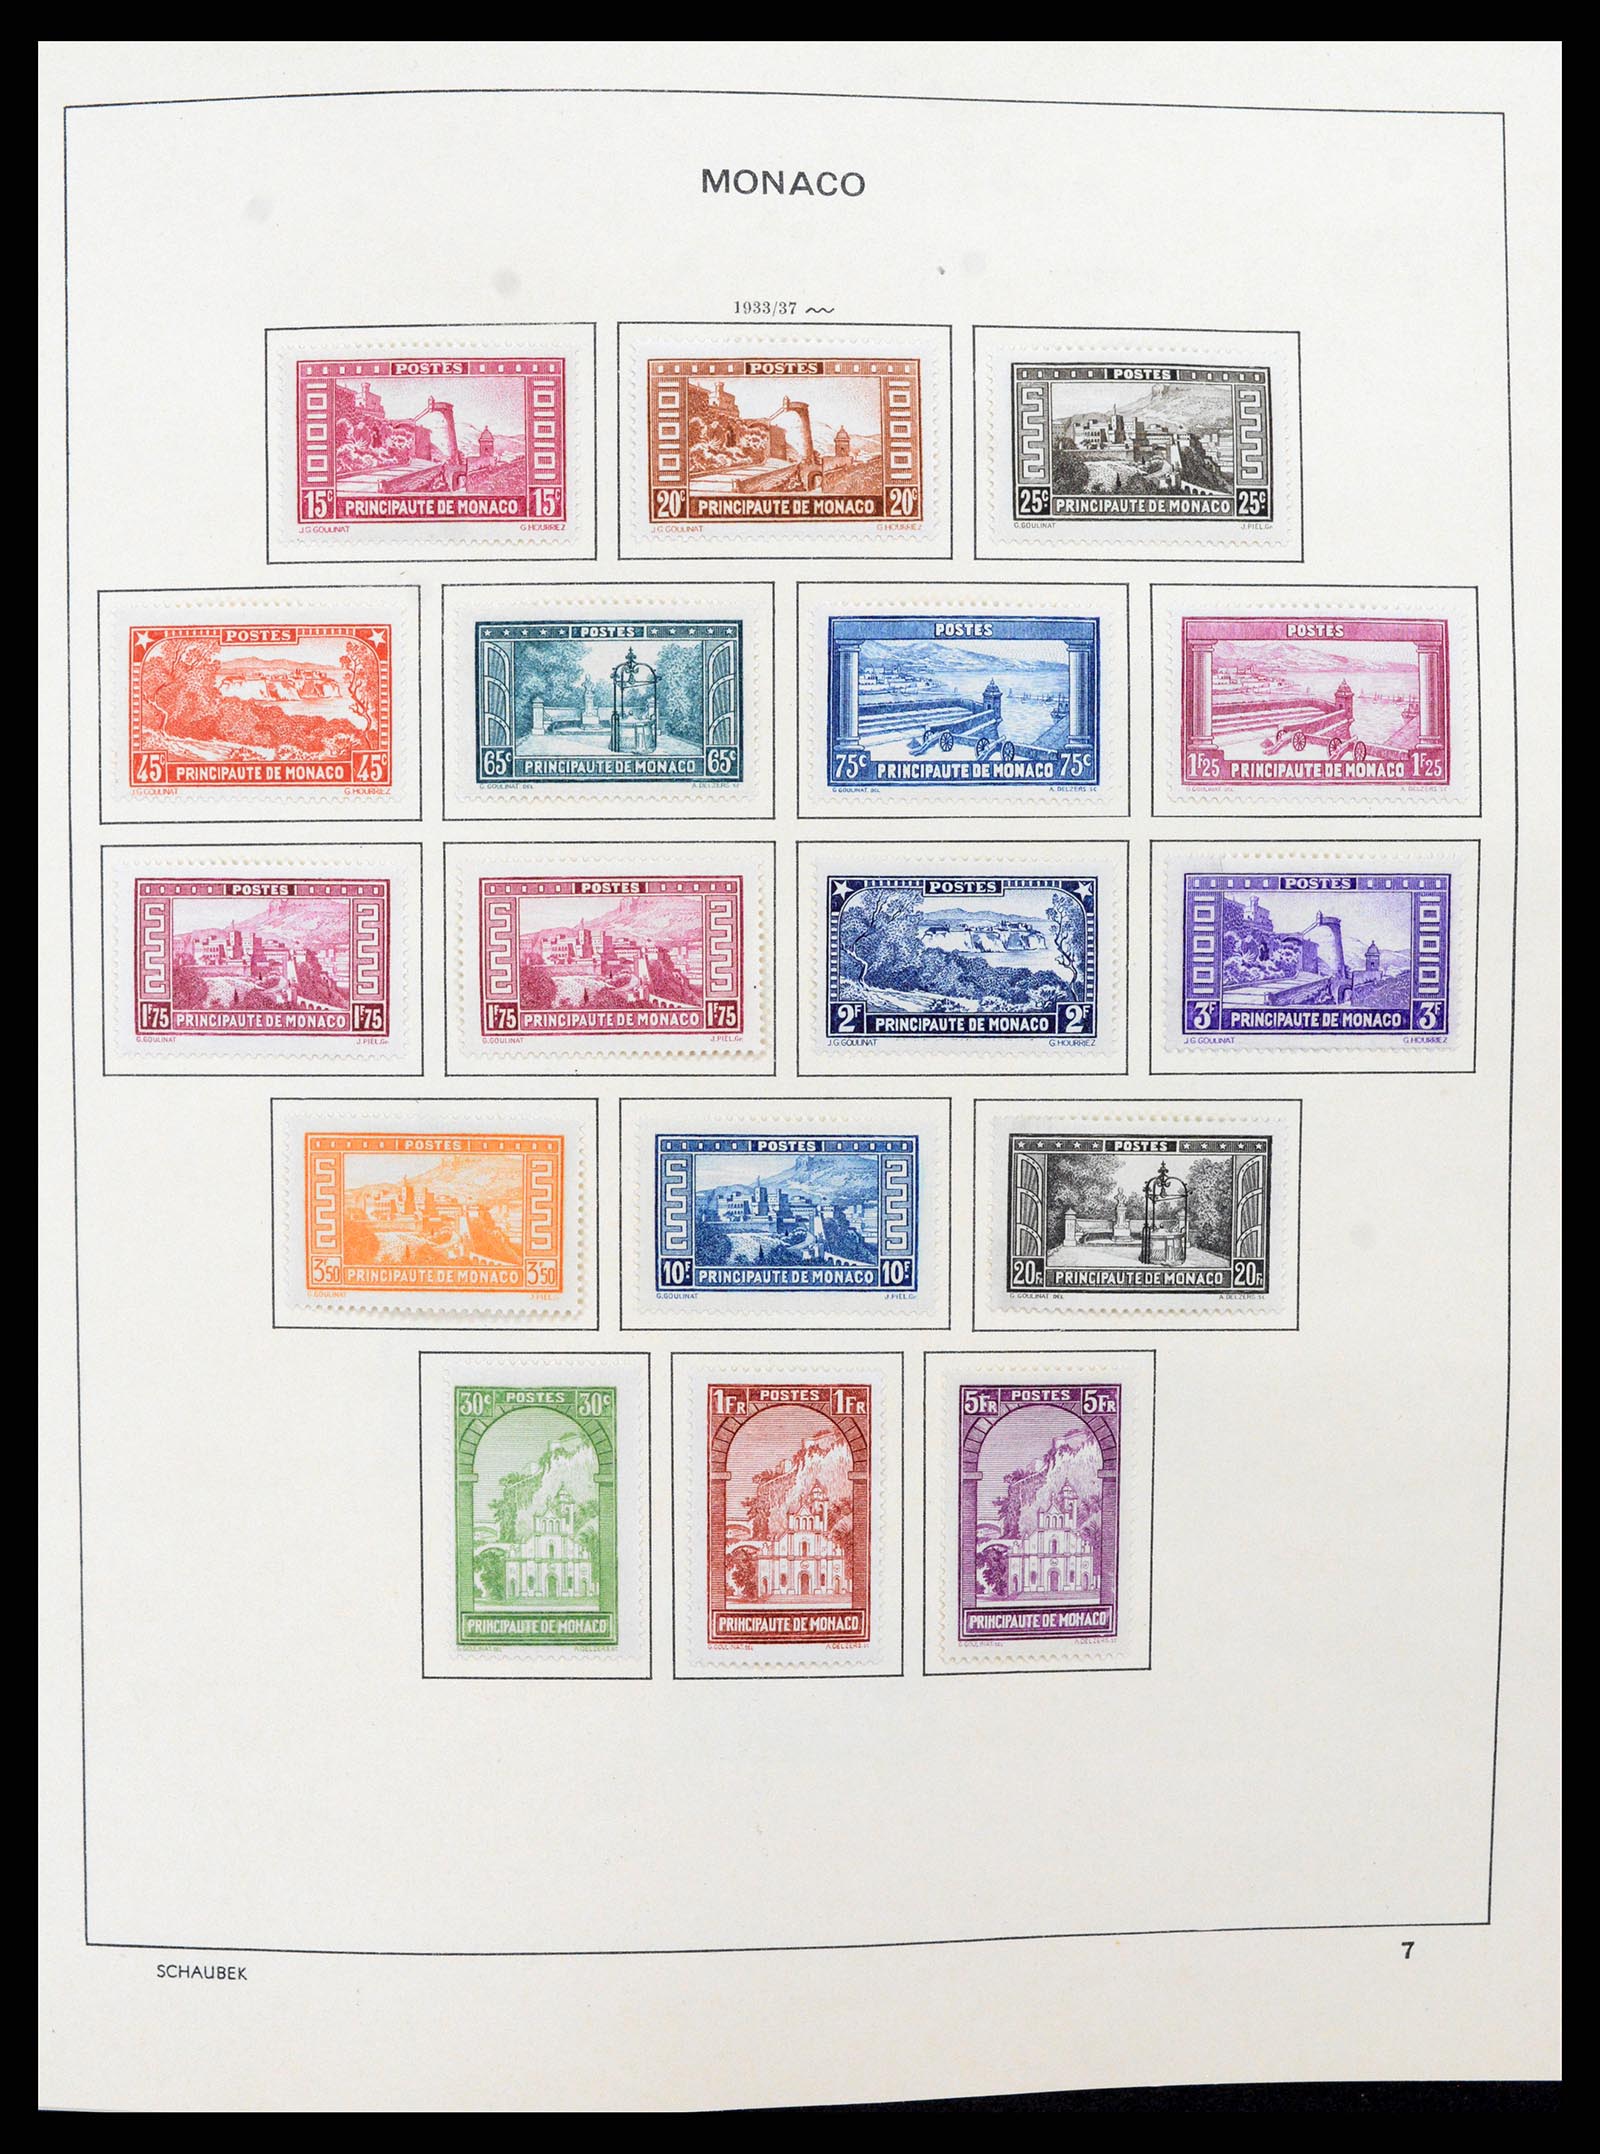 37570 007 - Stamp collection 37570 Monaco 1885-2013.